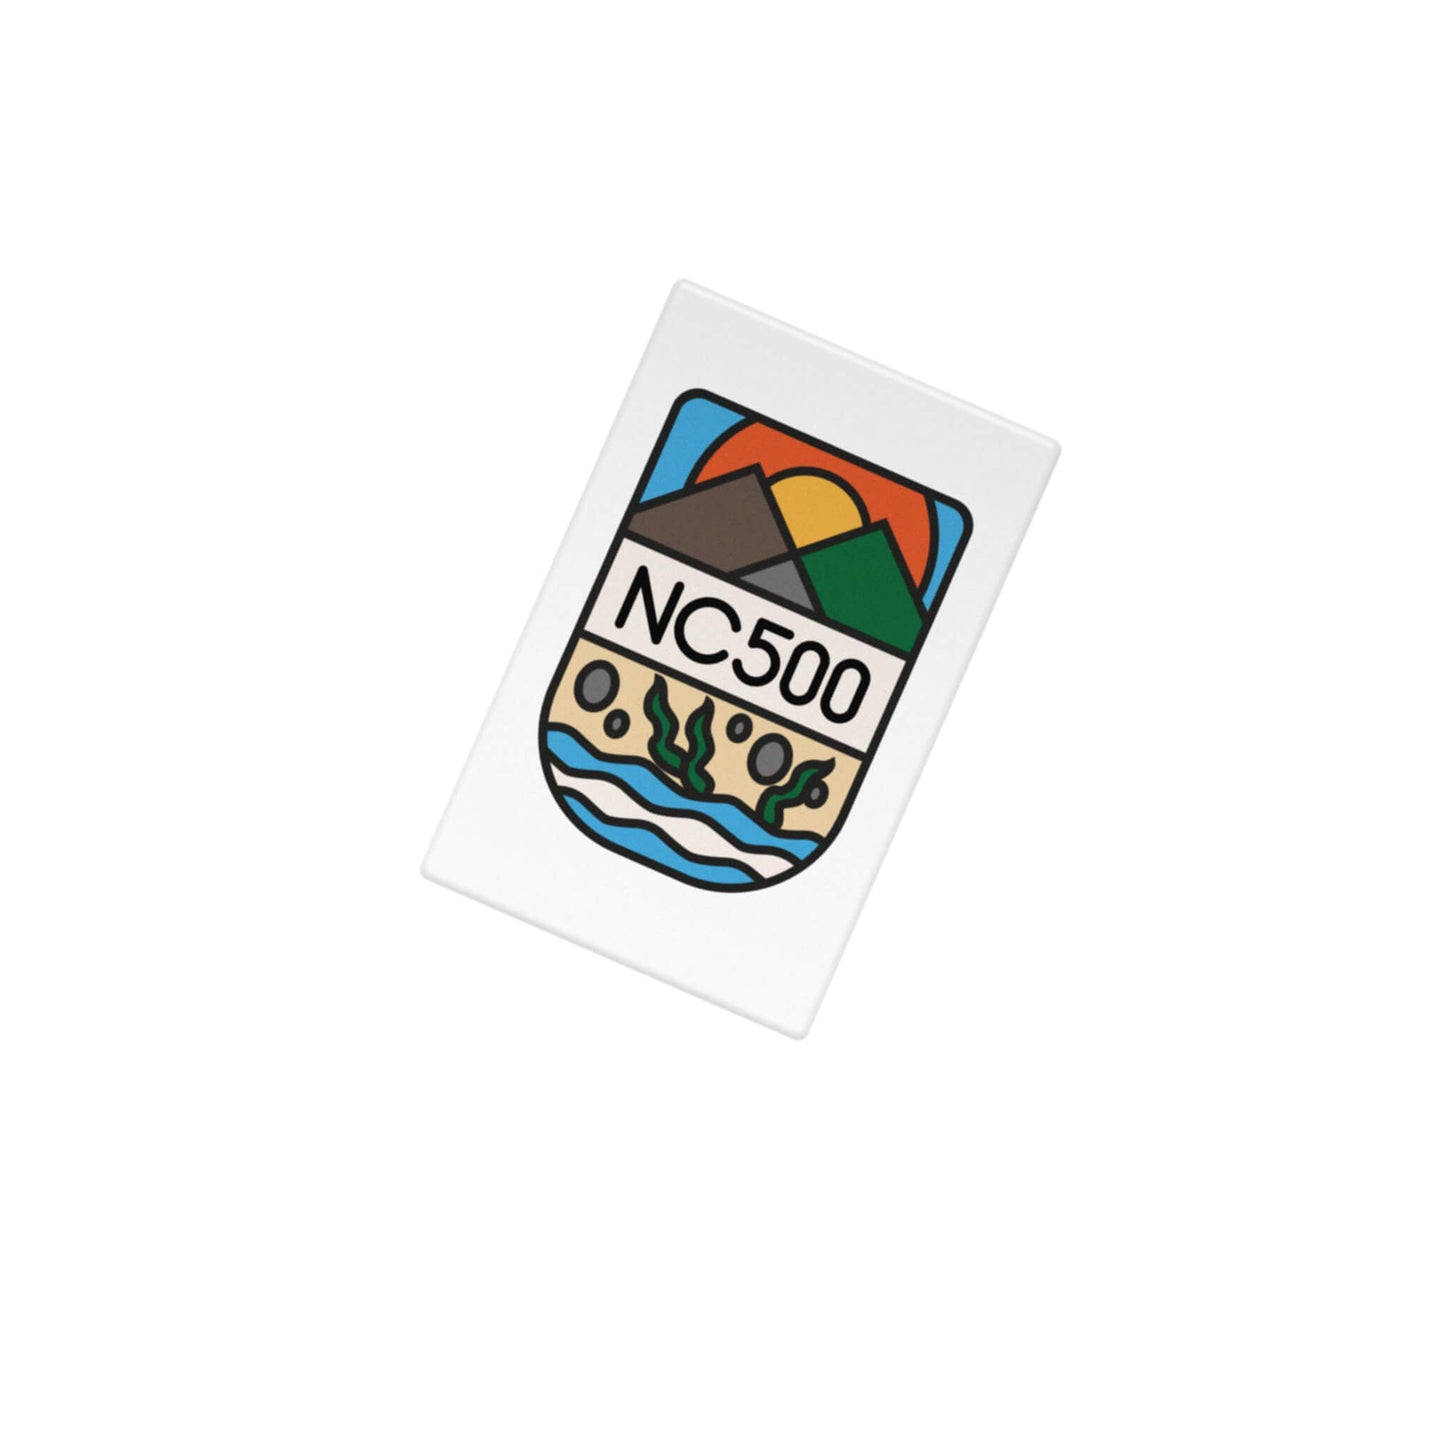 Land & Sea Fridge Magnet - White - North Coast 500